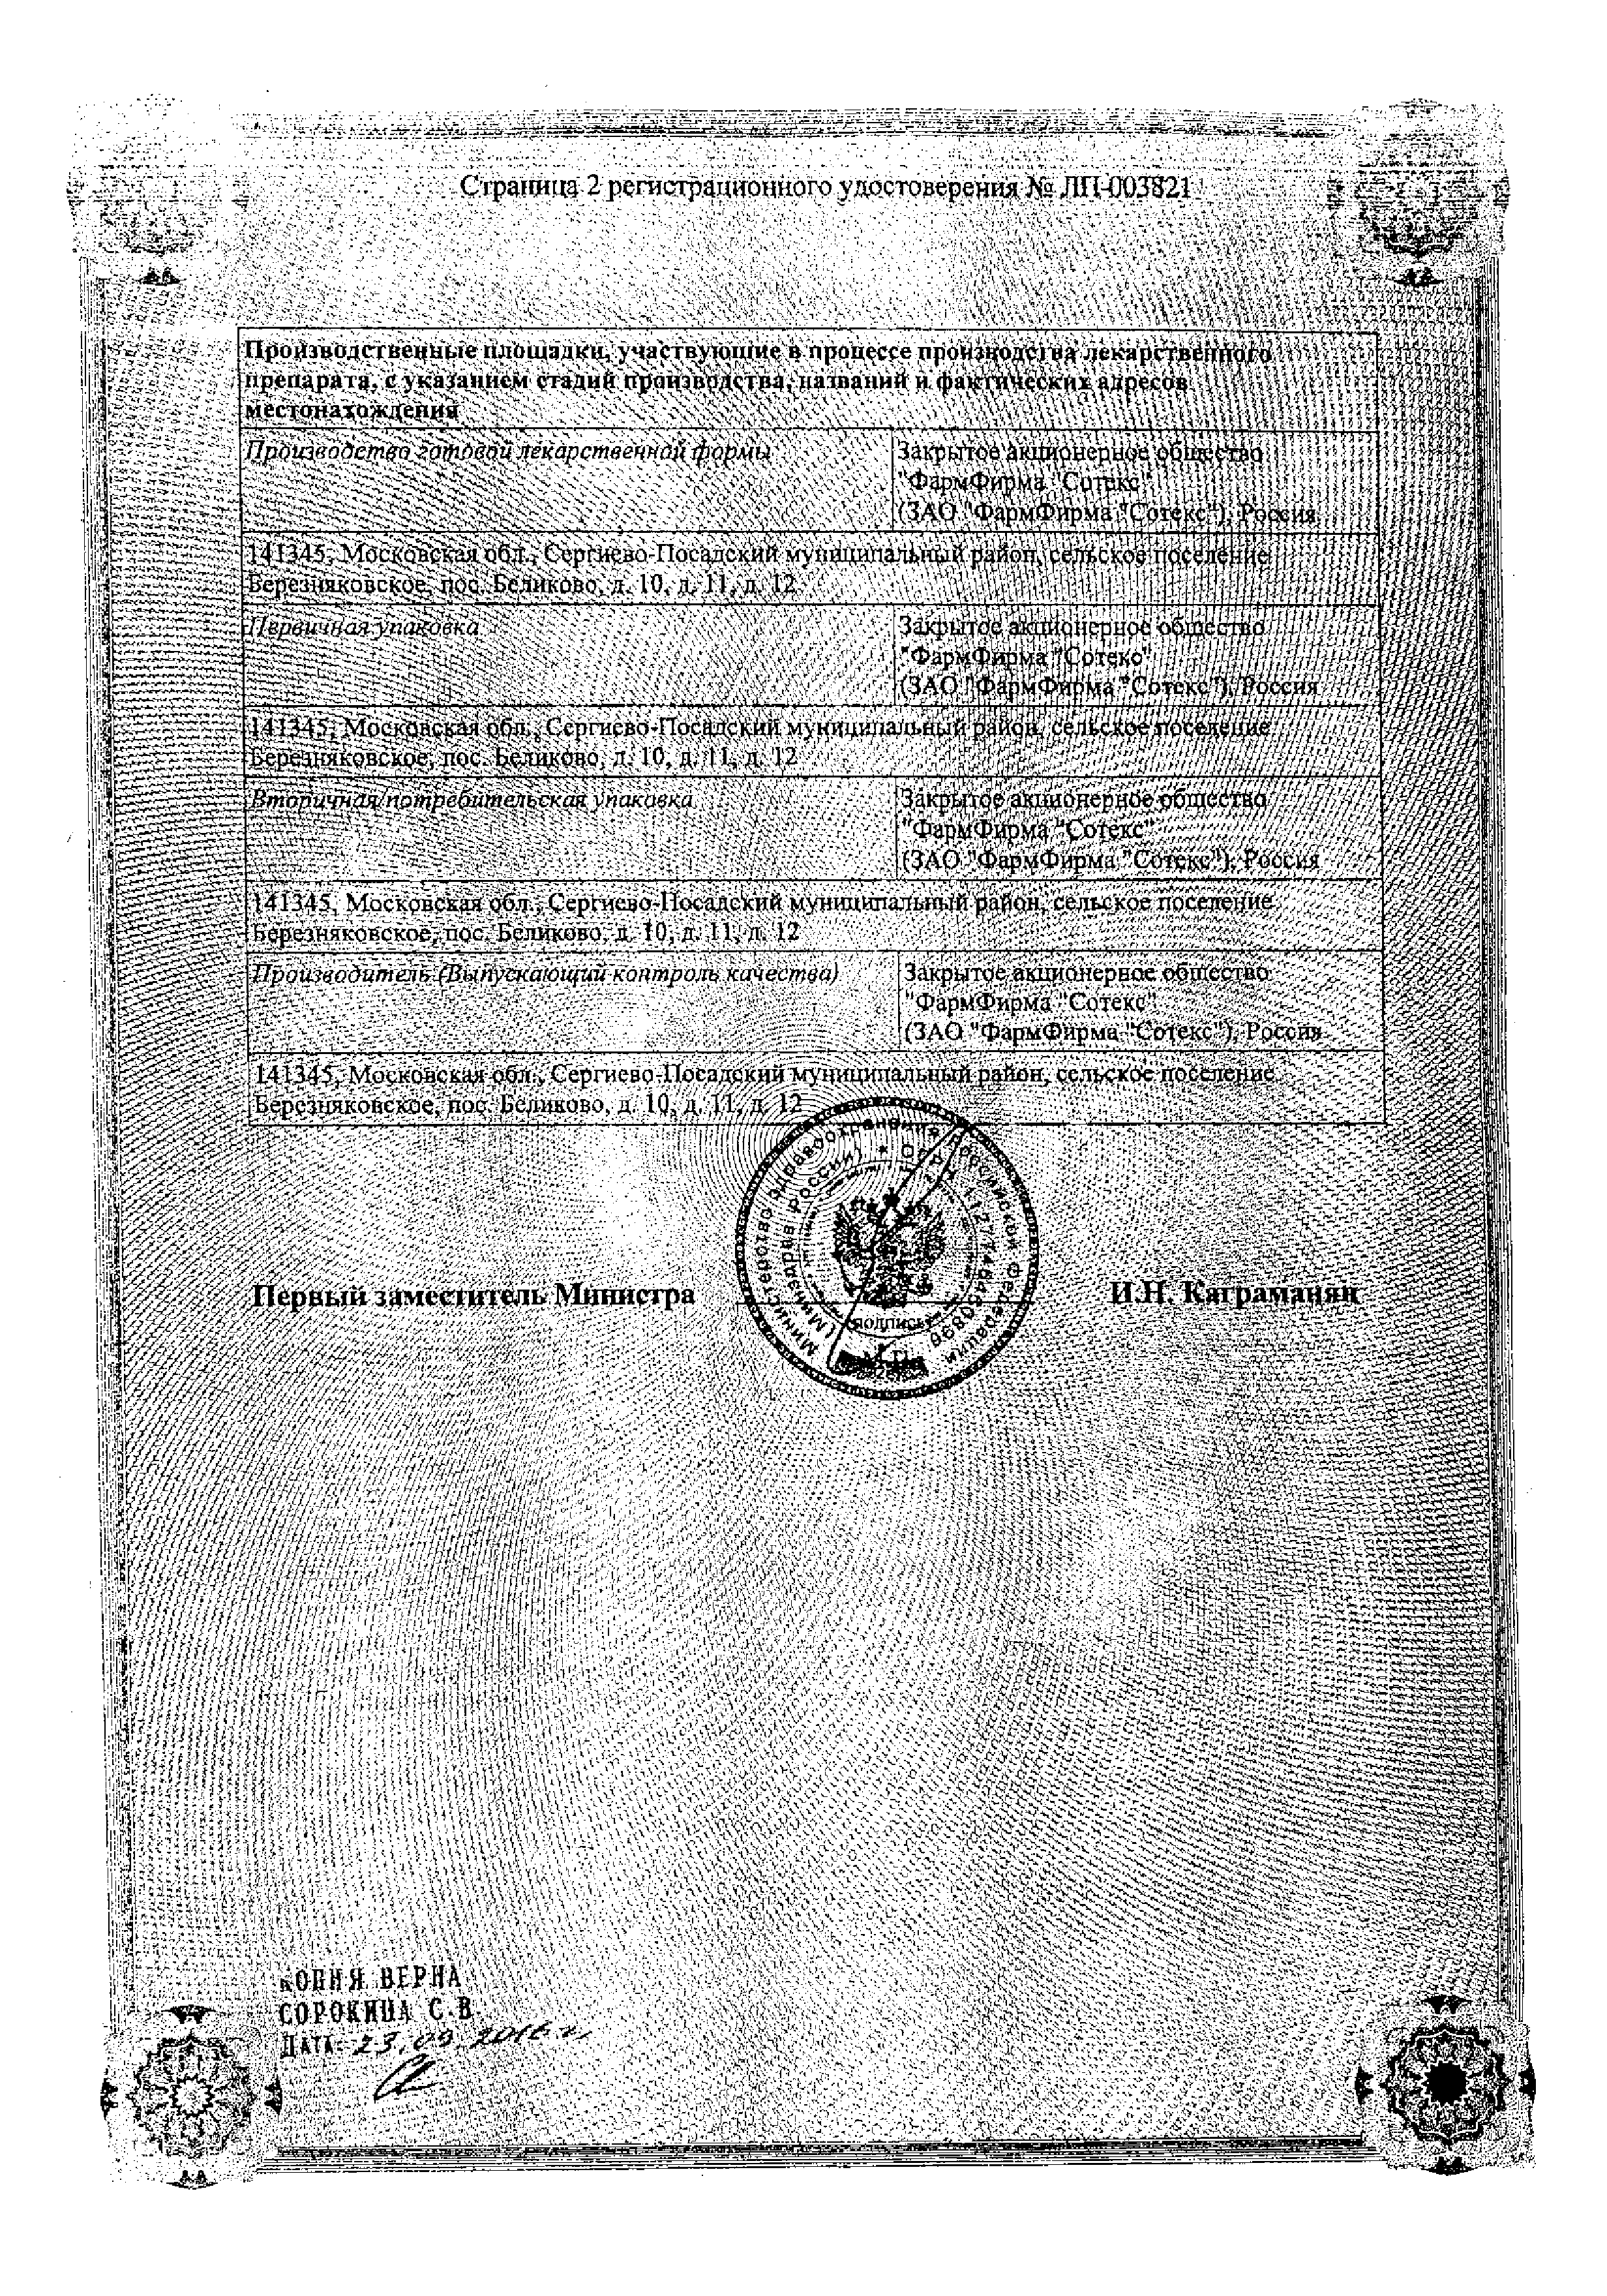 Калмирекс сертификат